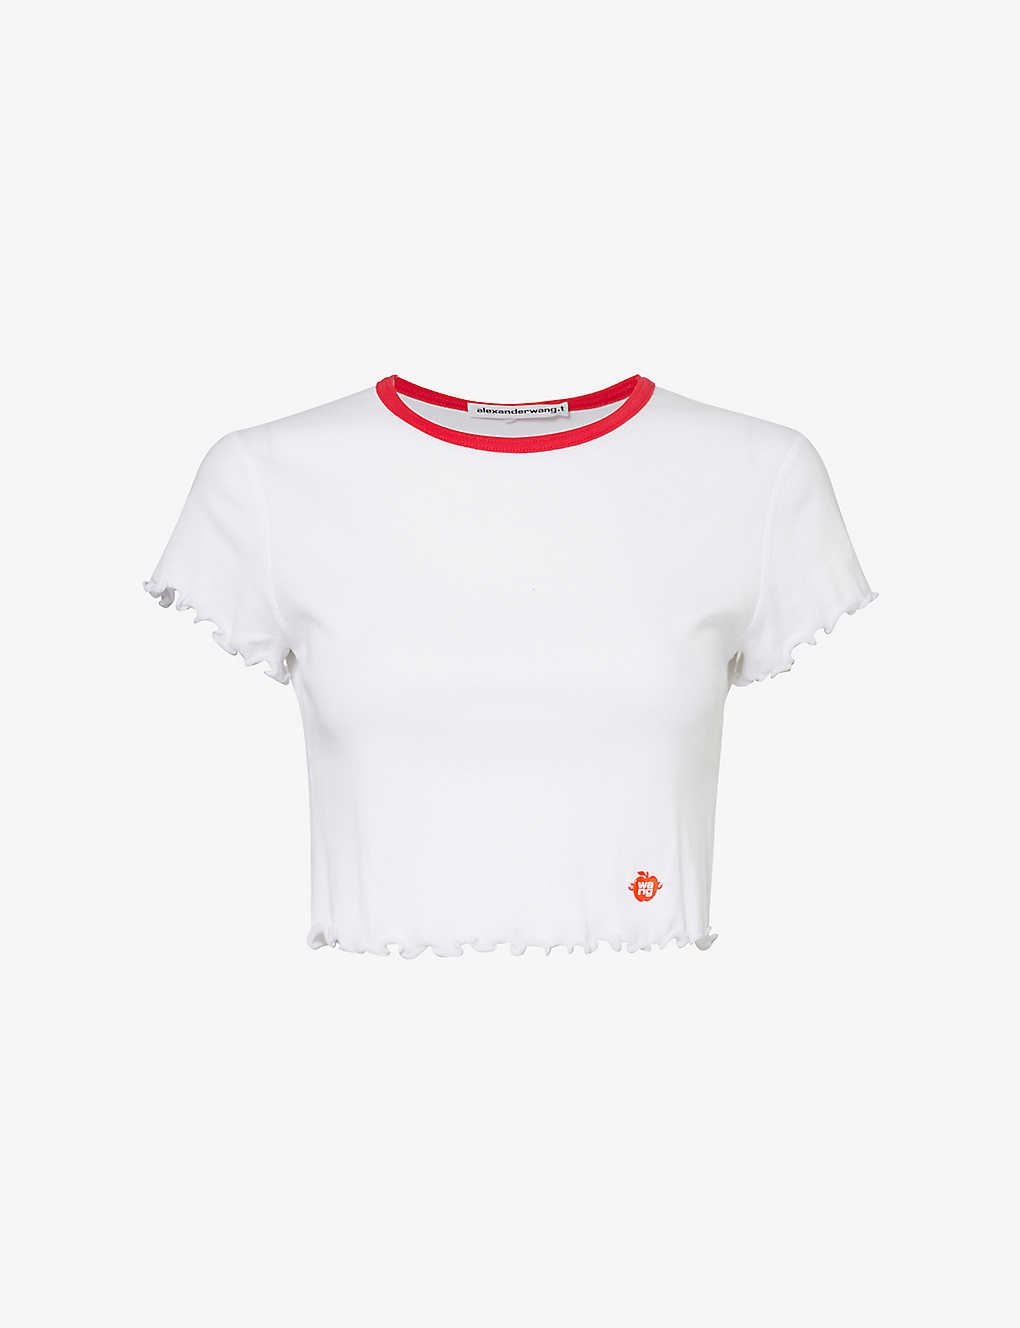 Shop Alexander Wang Women's White Cropped Cotton-jersey T-shirt